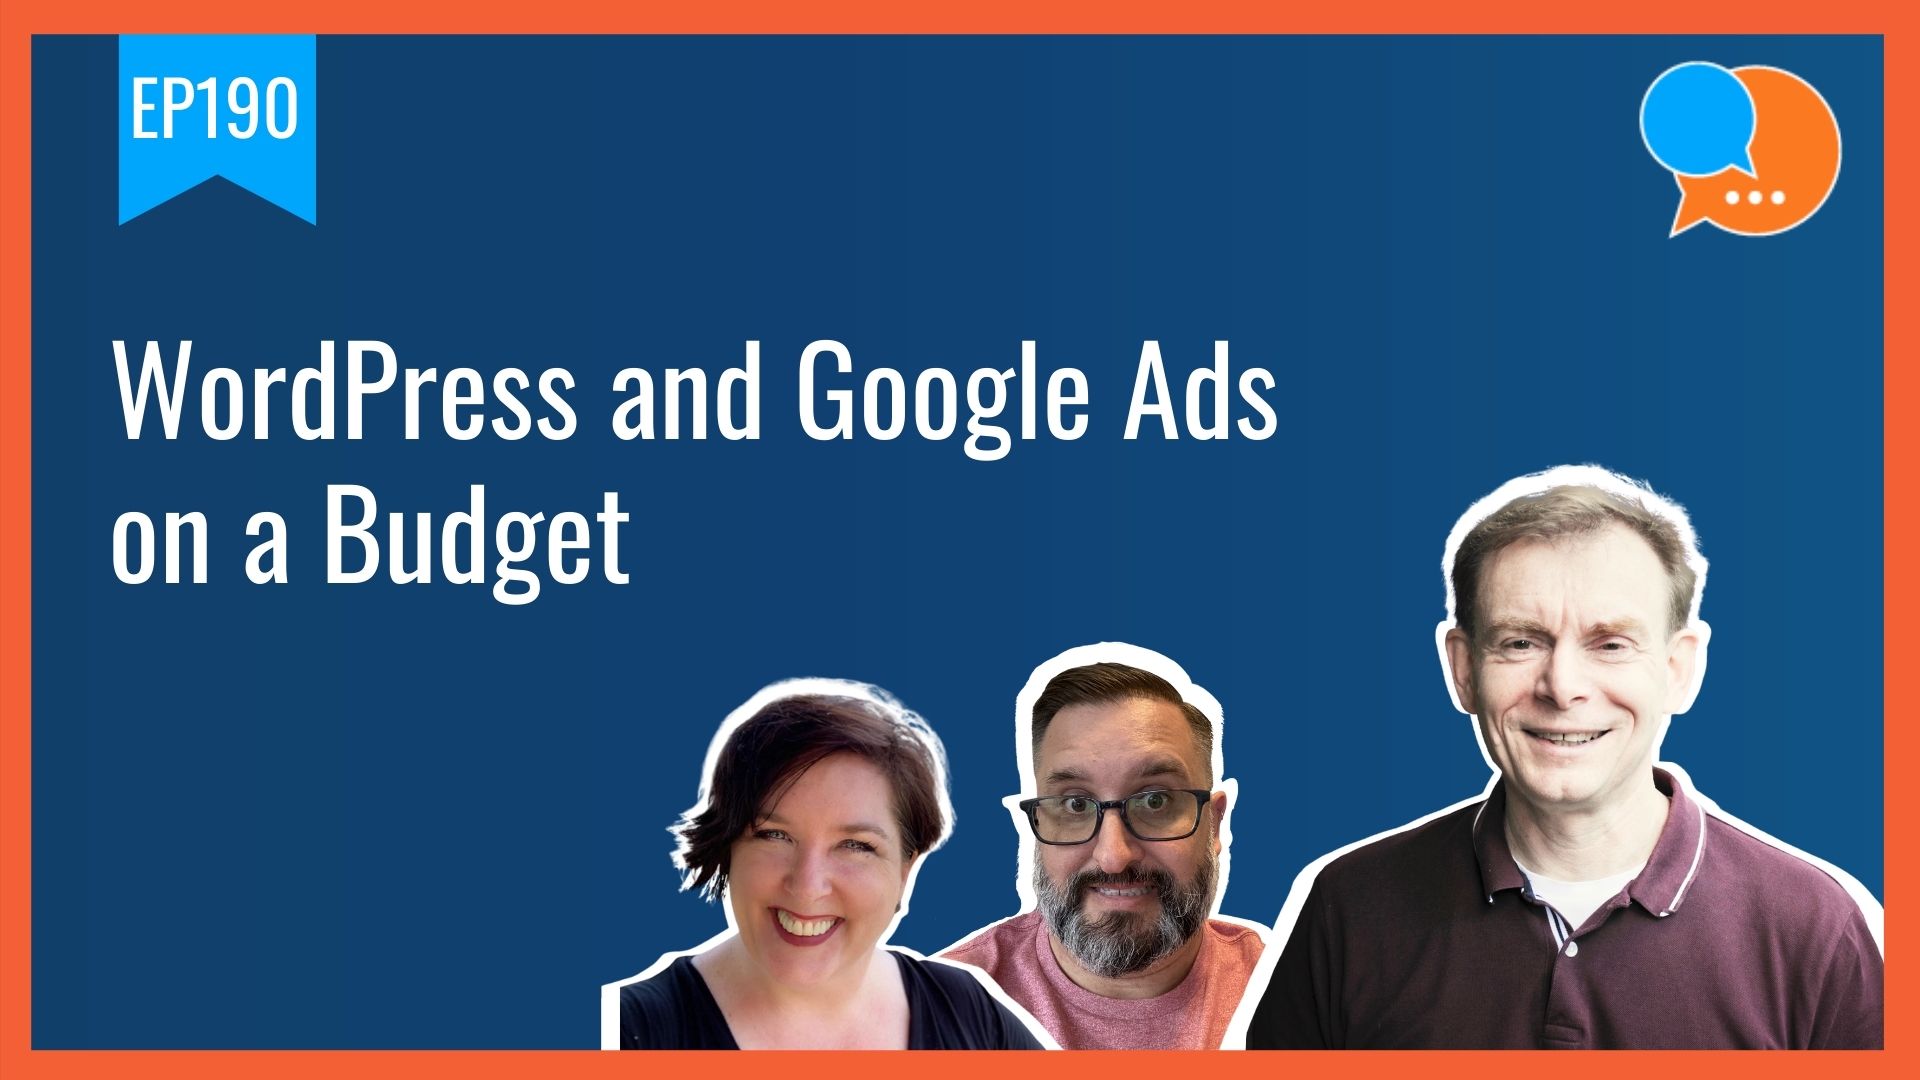 EP190 WordPress and Google Ads on a Budget Smart Marketing Show